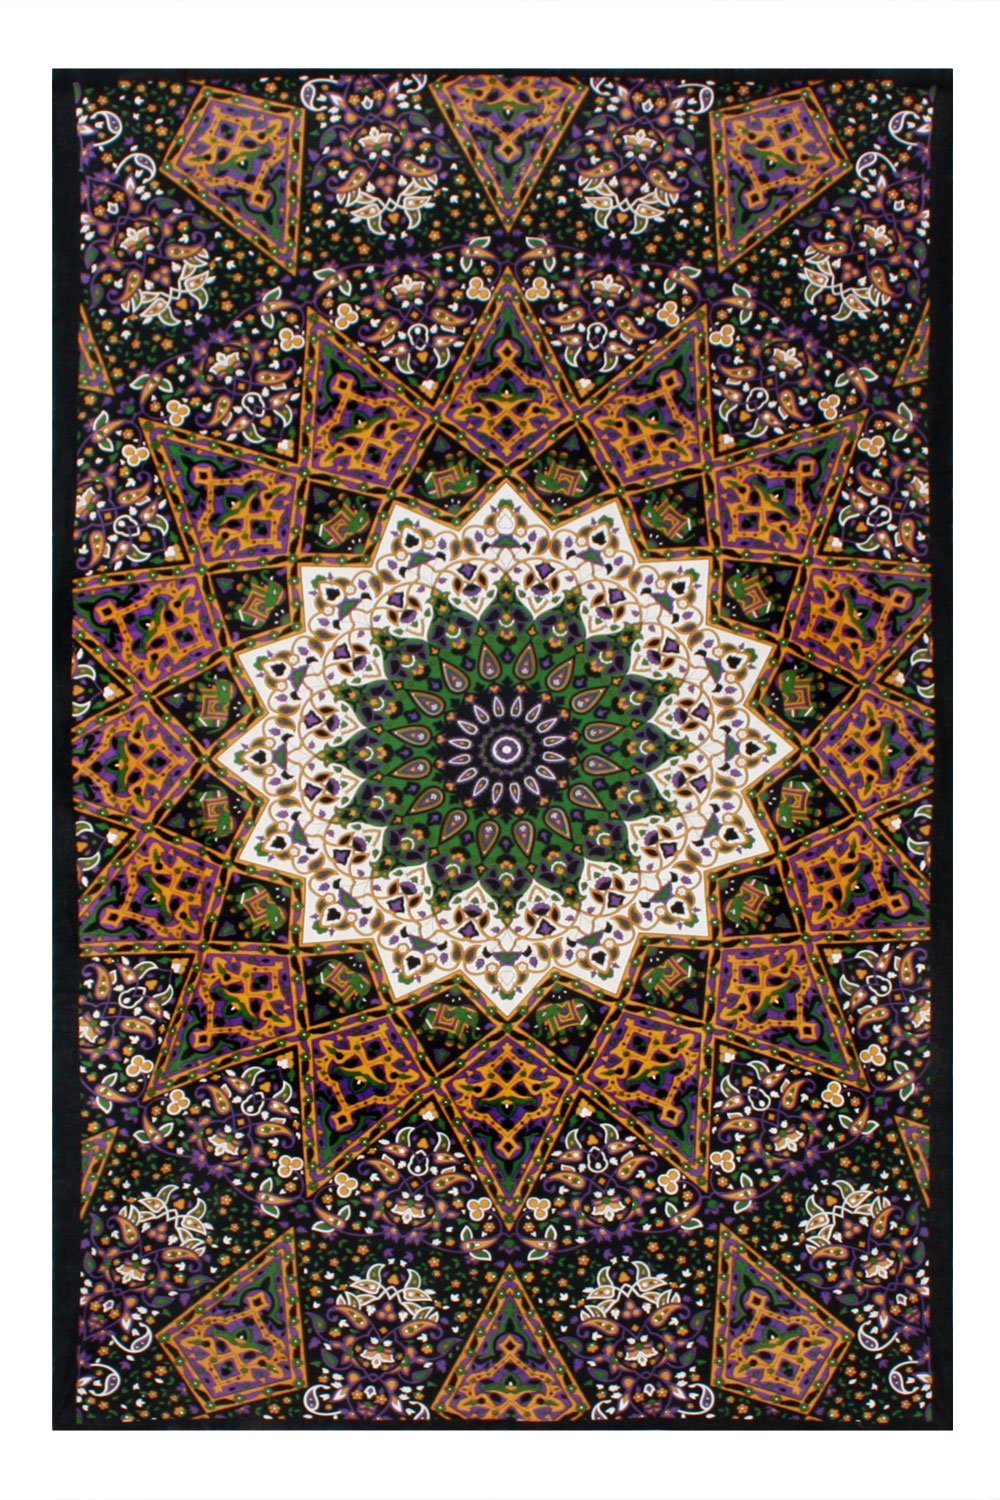 Tapestry Wall Hangings Via Ecx Image Amazon